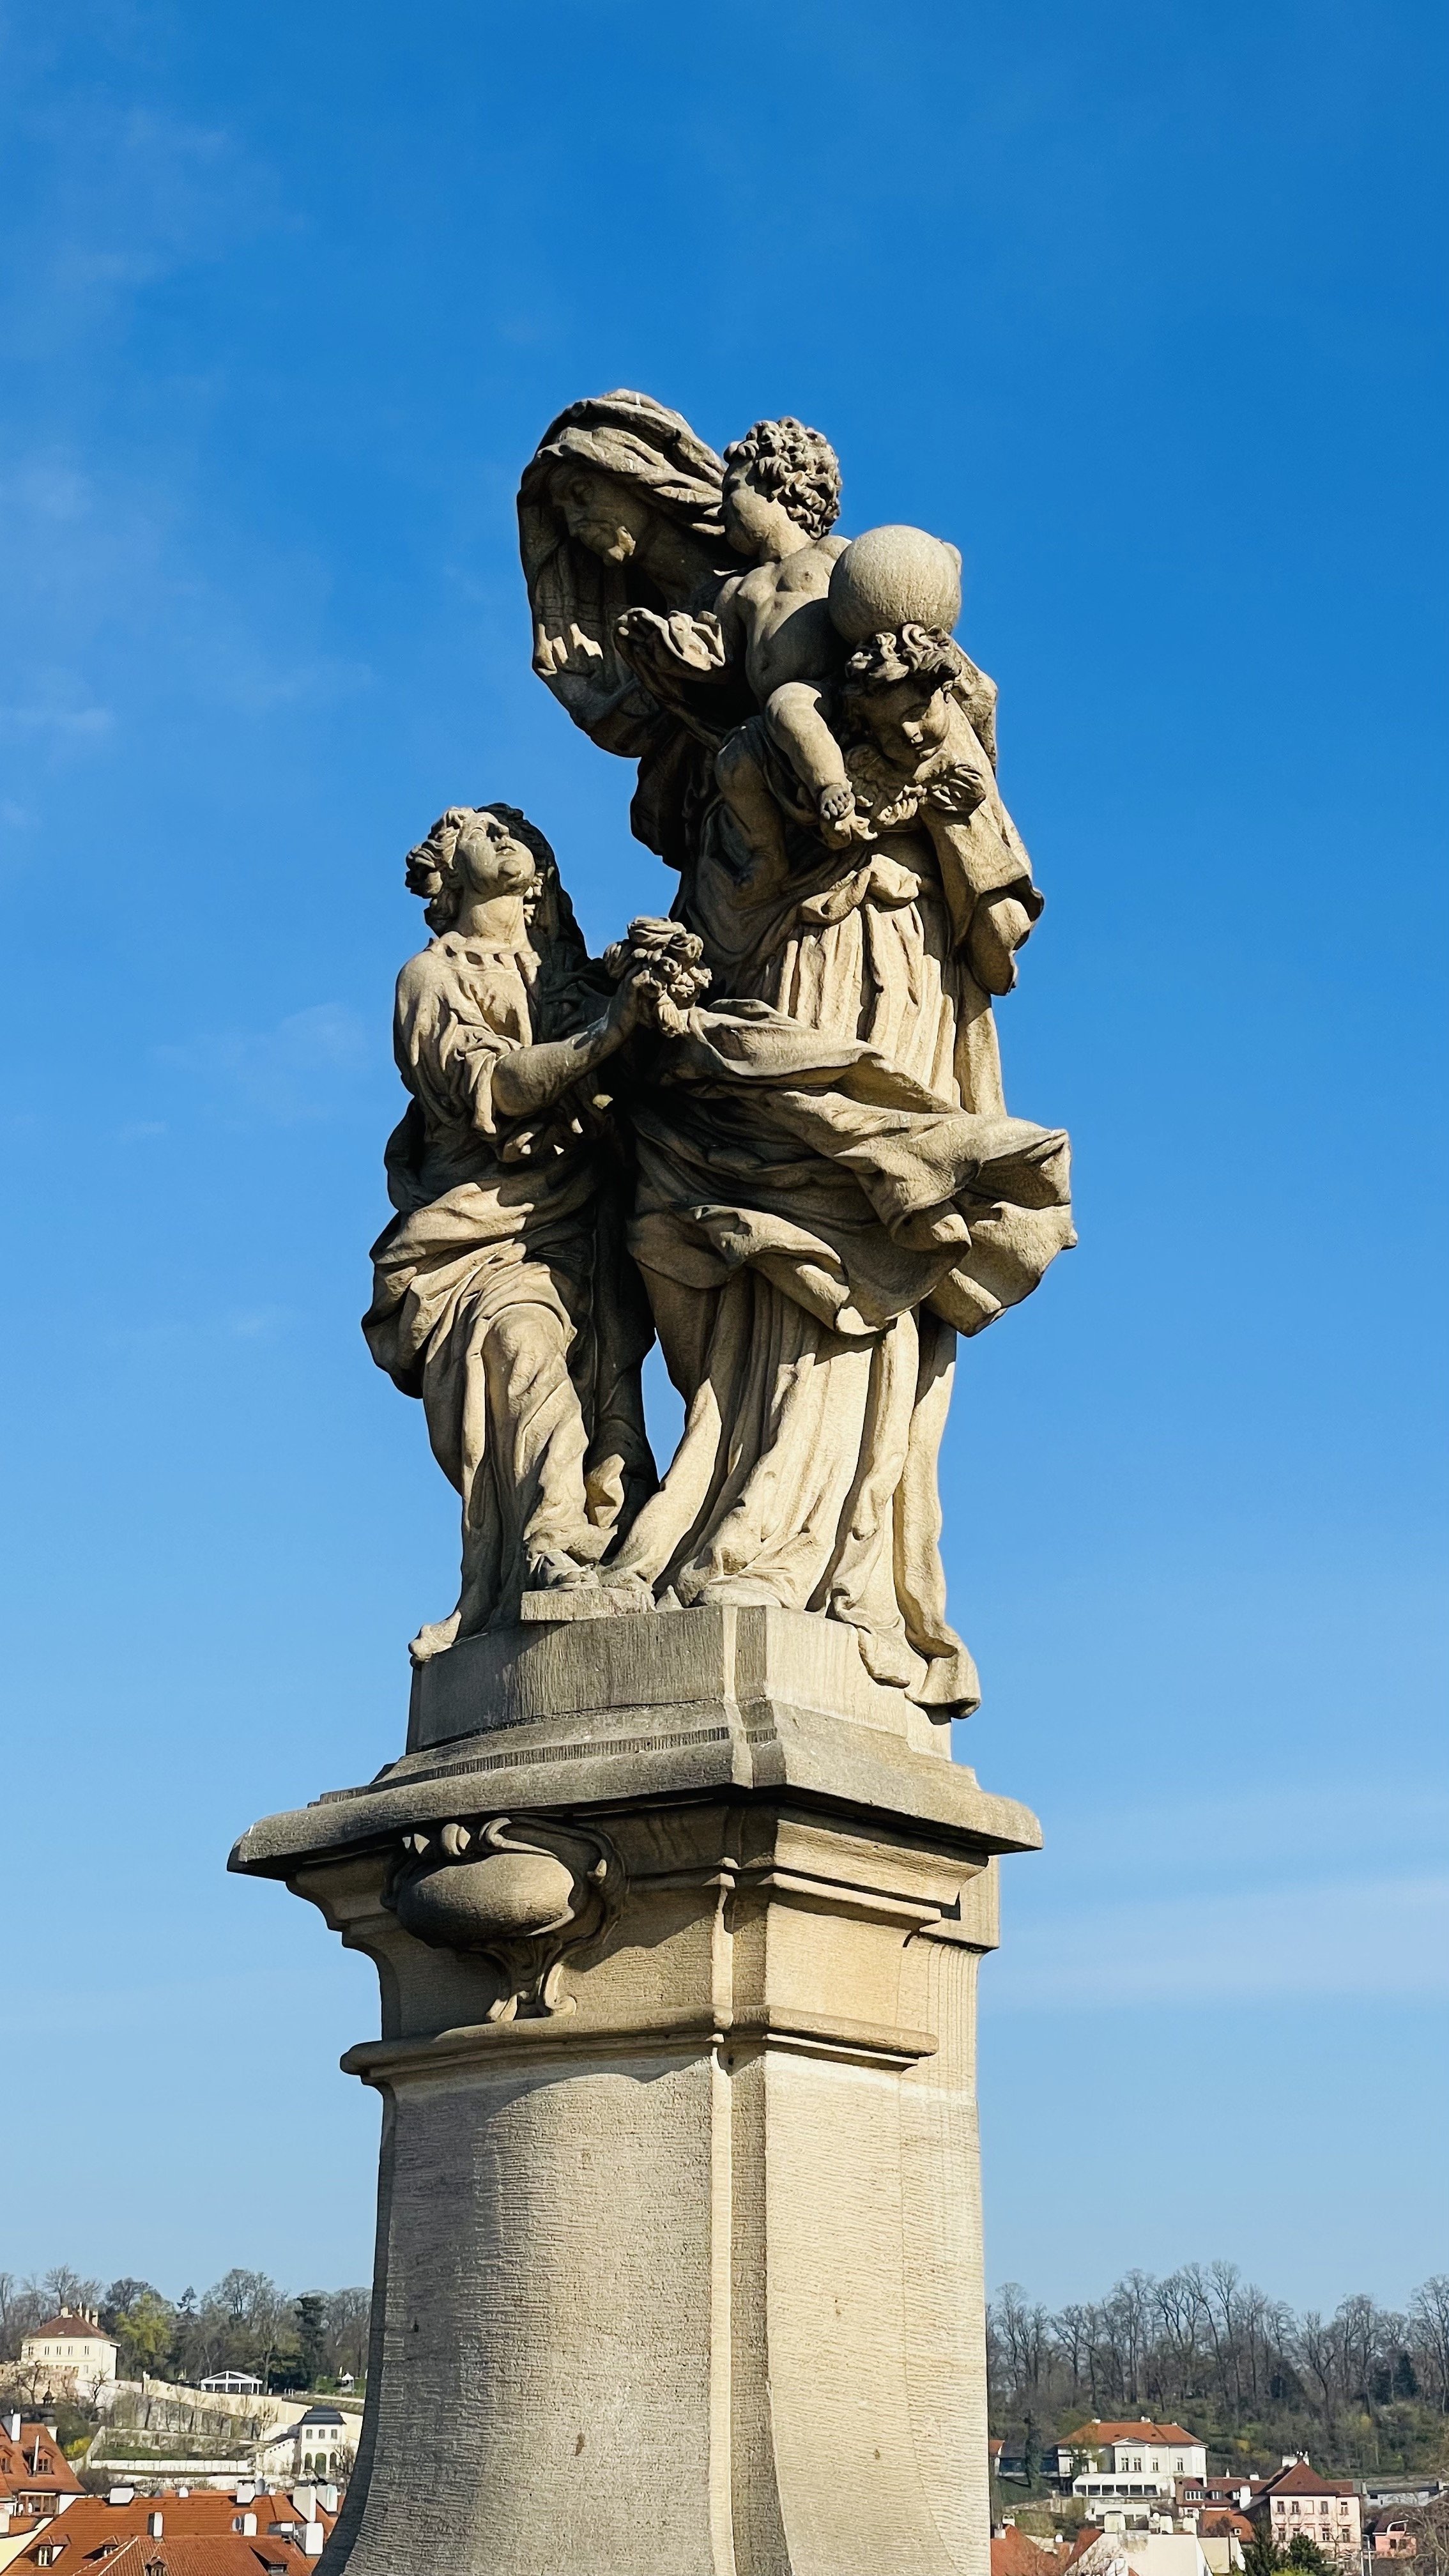 Statue of St. Anne in Charles Bridge (Copia)